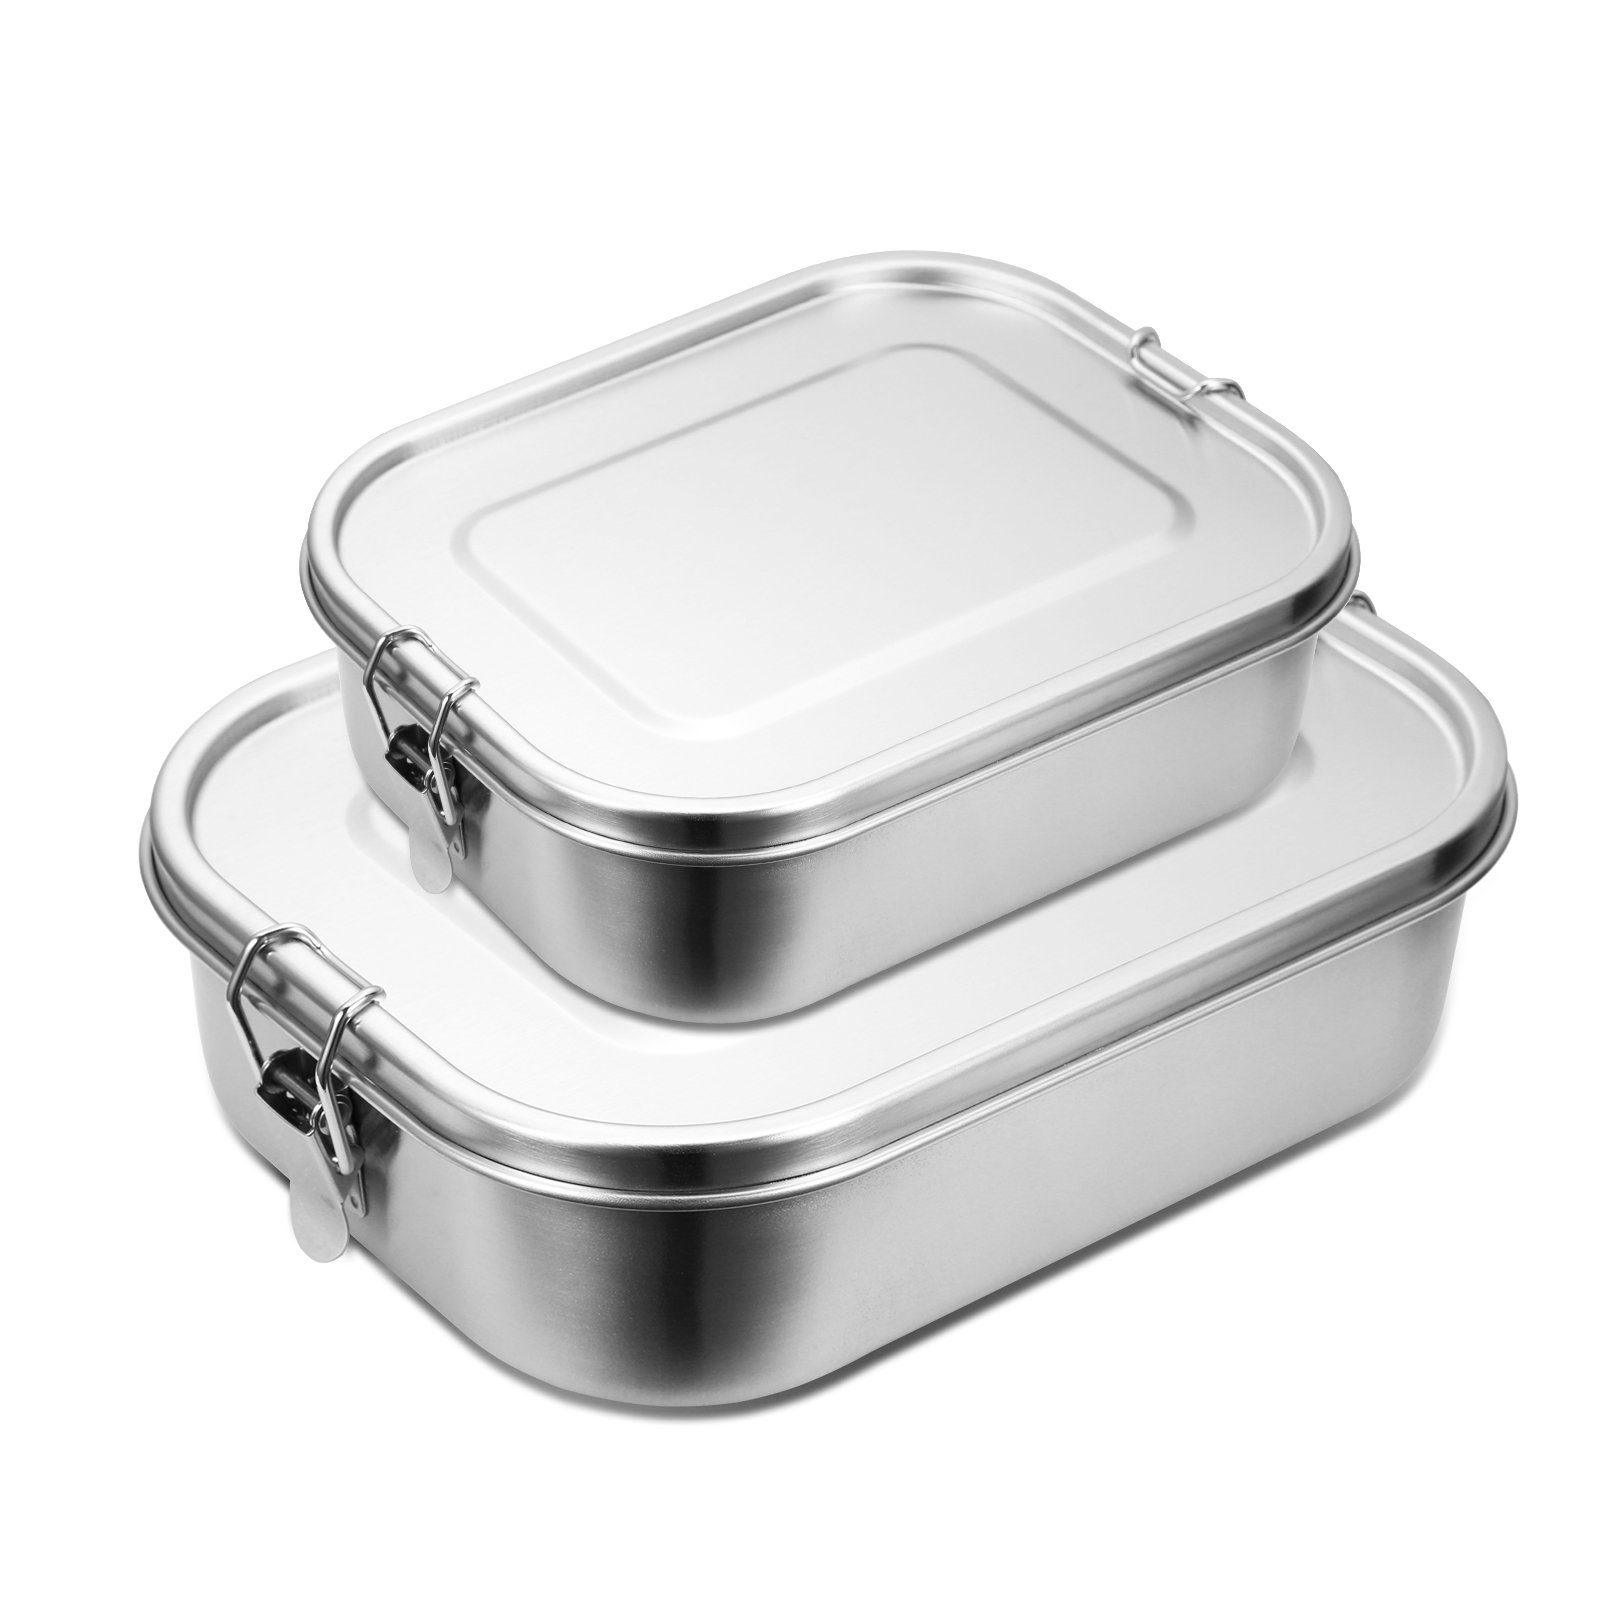 Gimisgu Lunchbox Edelstahl Brotdose - Lunchbox Picknick für 800+1400ml Nachhaltige Schule Büro Silber